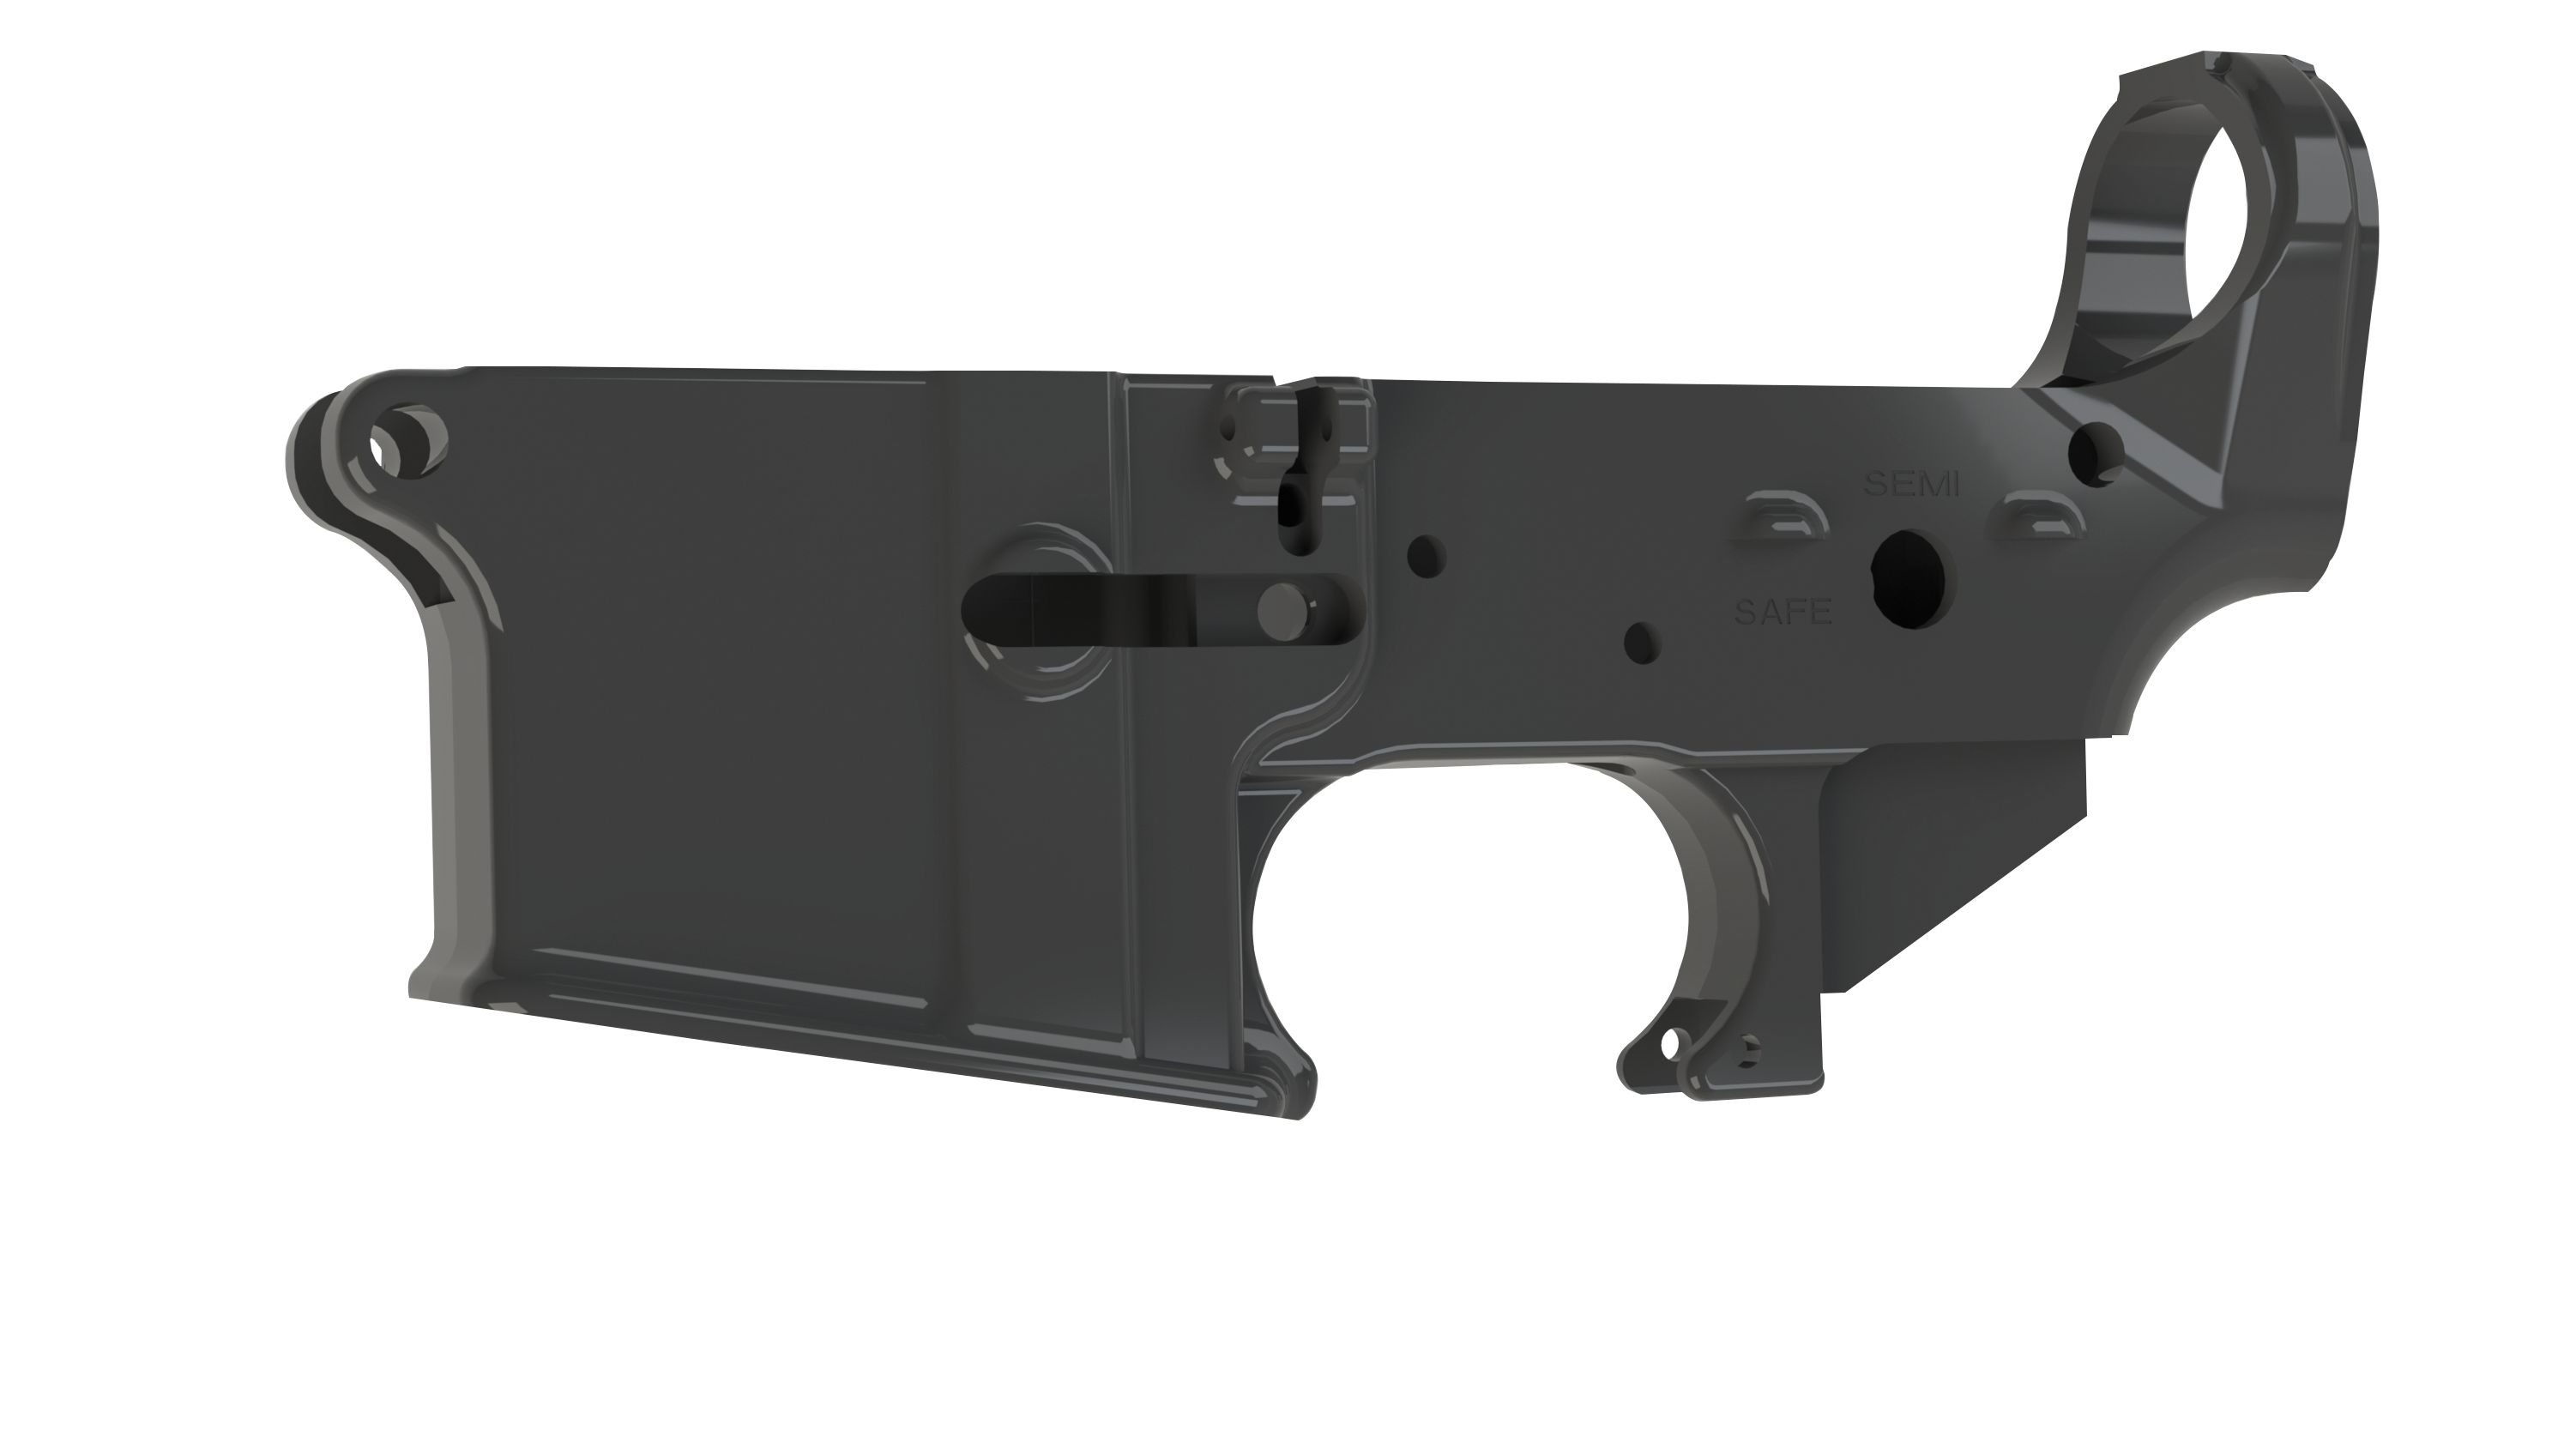 MIMTAC AR-15/M-16 Mil-Spec Lower Receiver